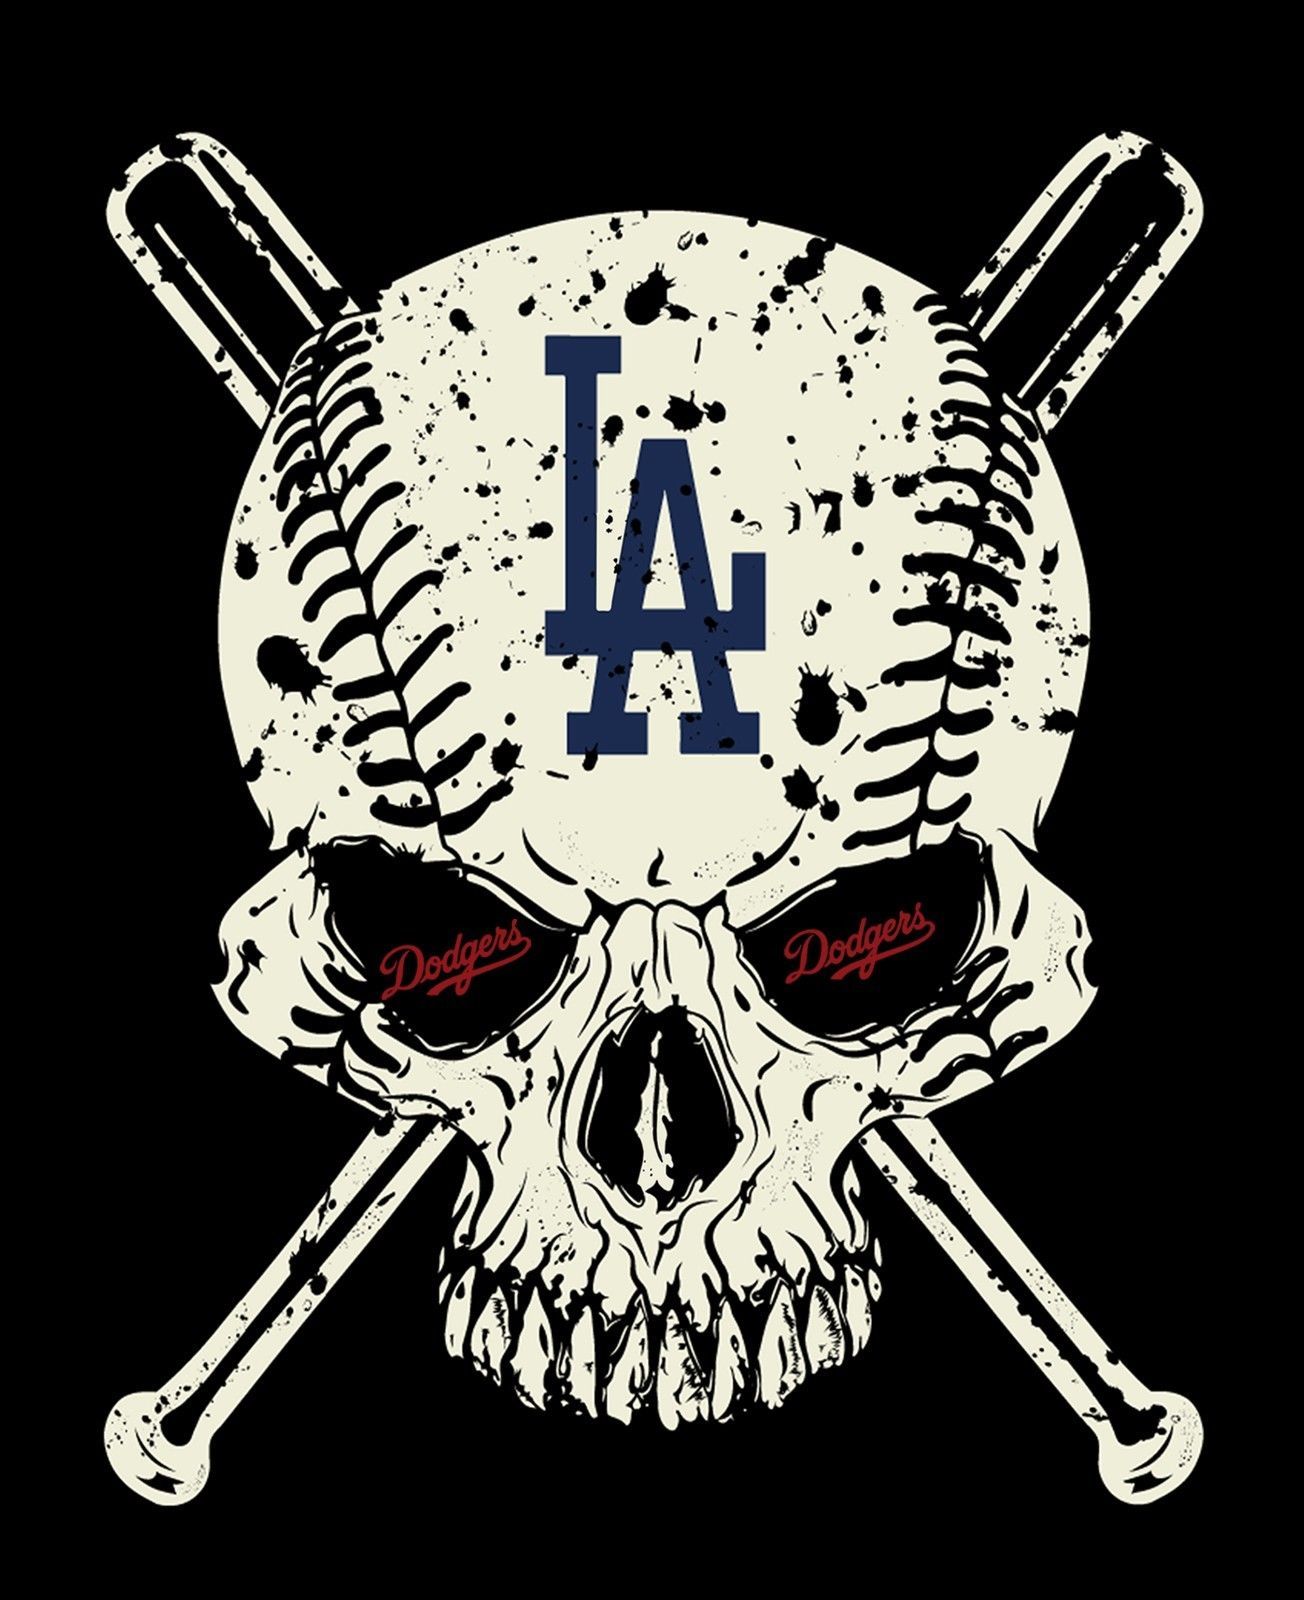 Los Angeles Dodgers Skull With Baseball Bats Across Image Men's T-Shirts